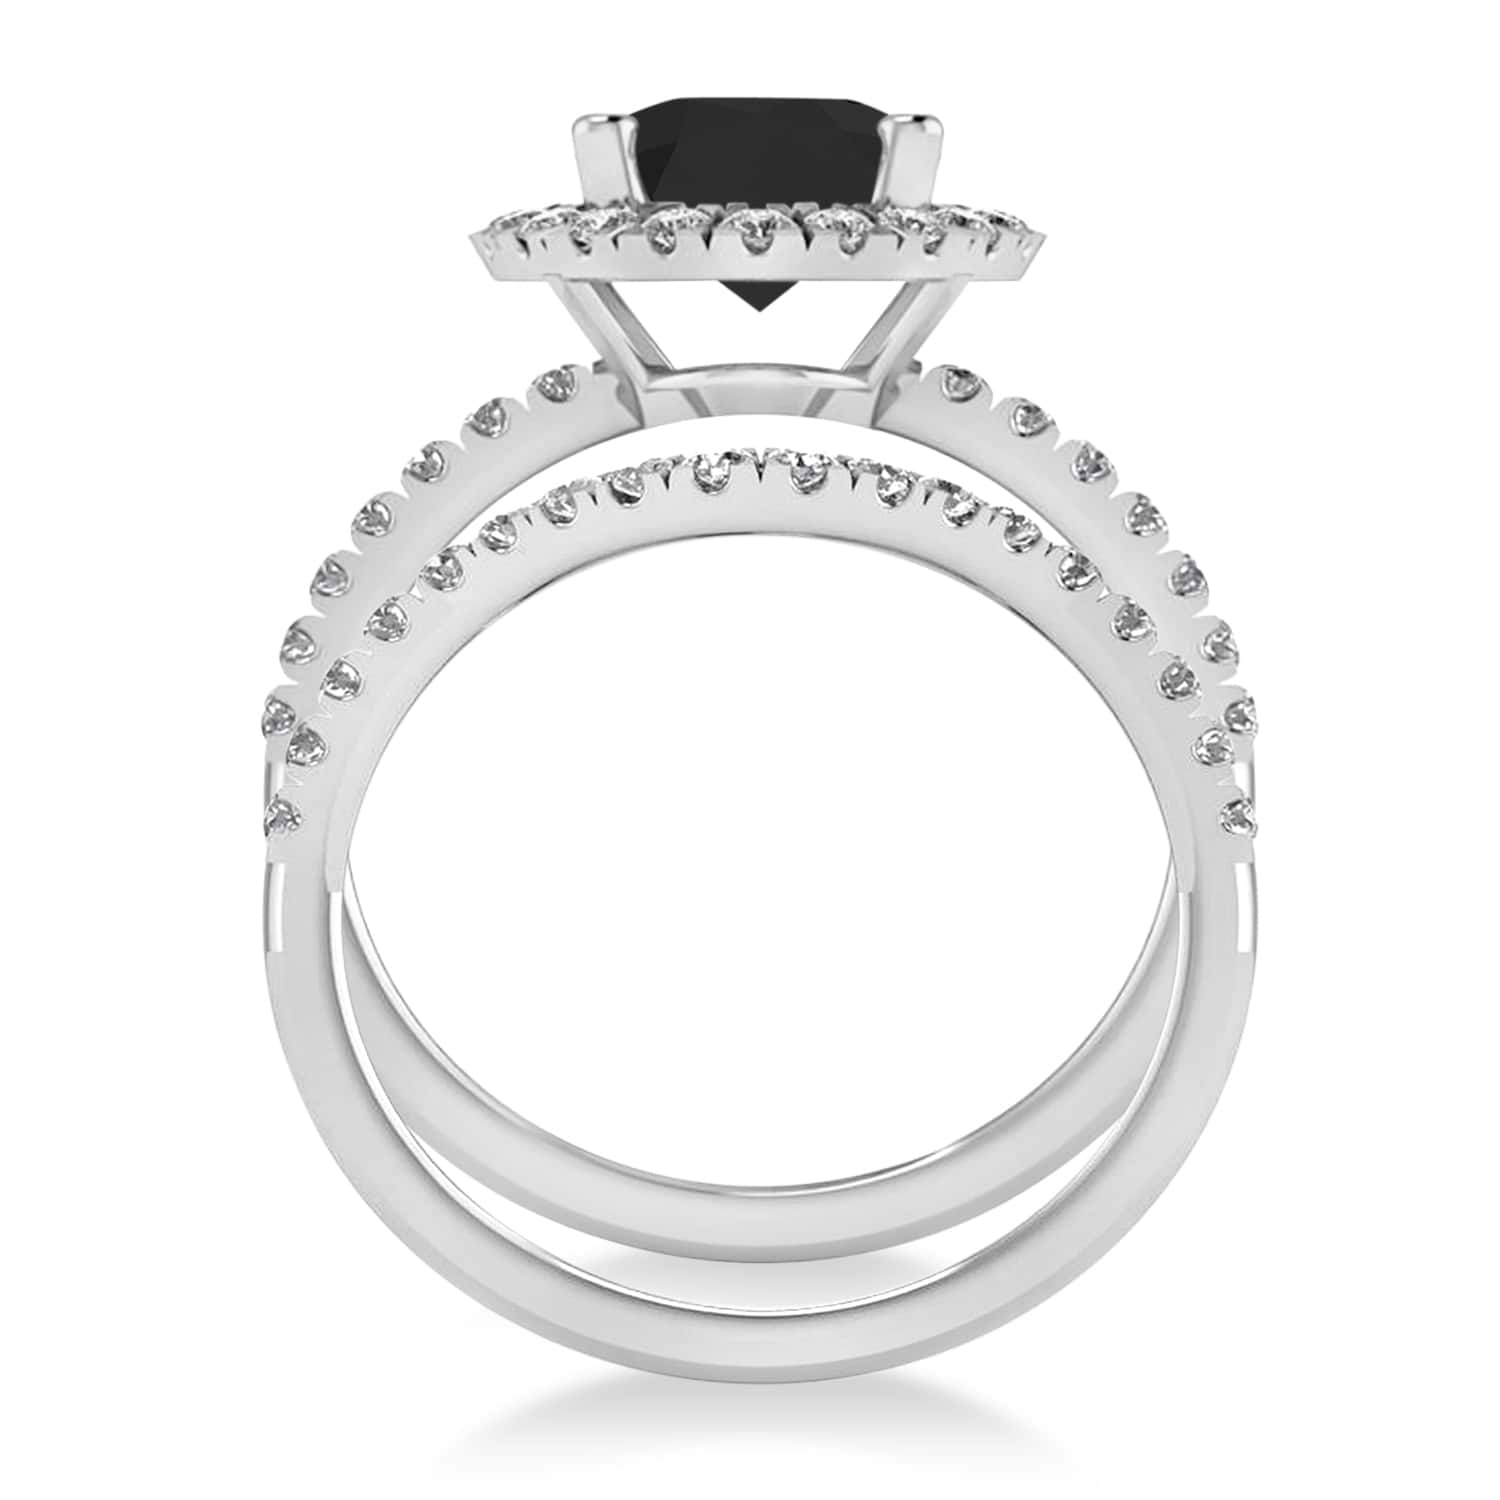 Black & White Diamonds Oval-Cut Halo Bridal Set 14K White Gold (3.78ct)